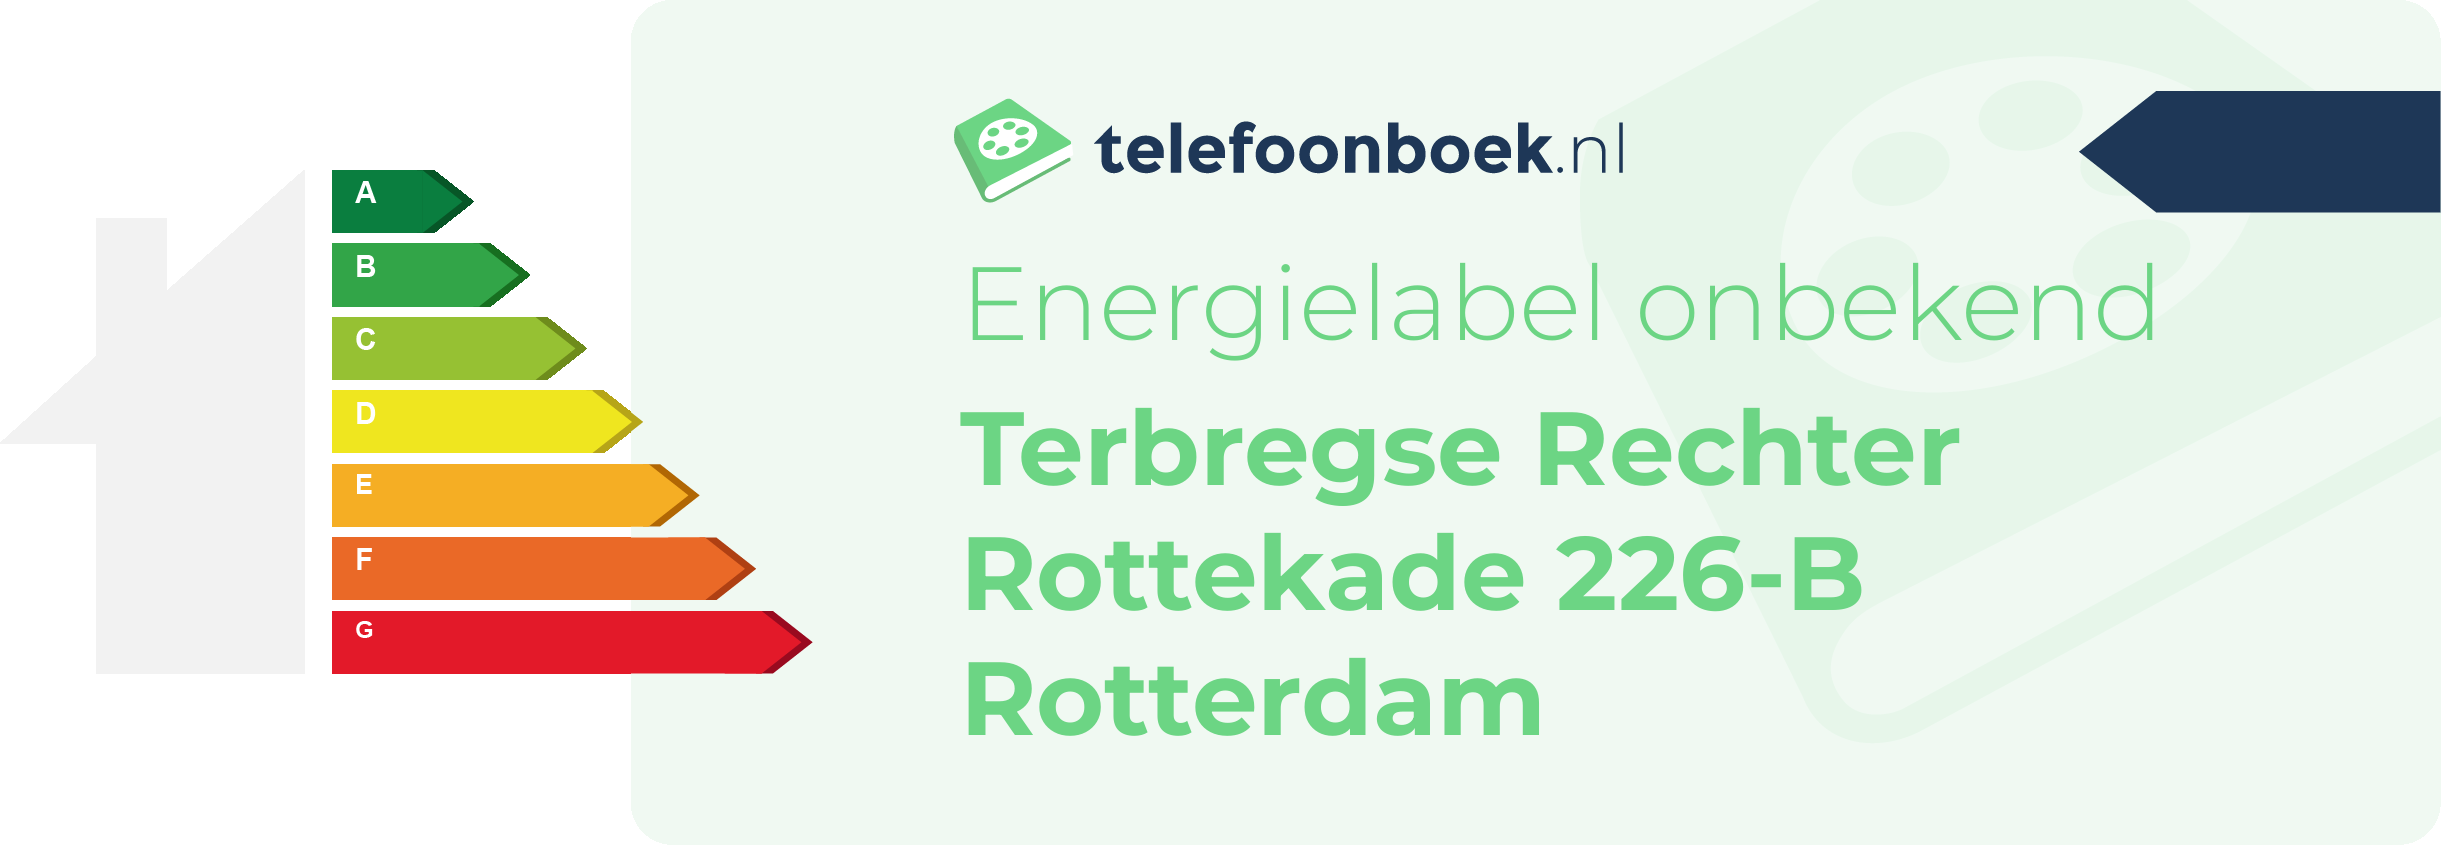 Energielabel Terbregse Rechter Rottekade 226-B Rotterdam